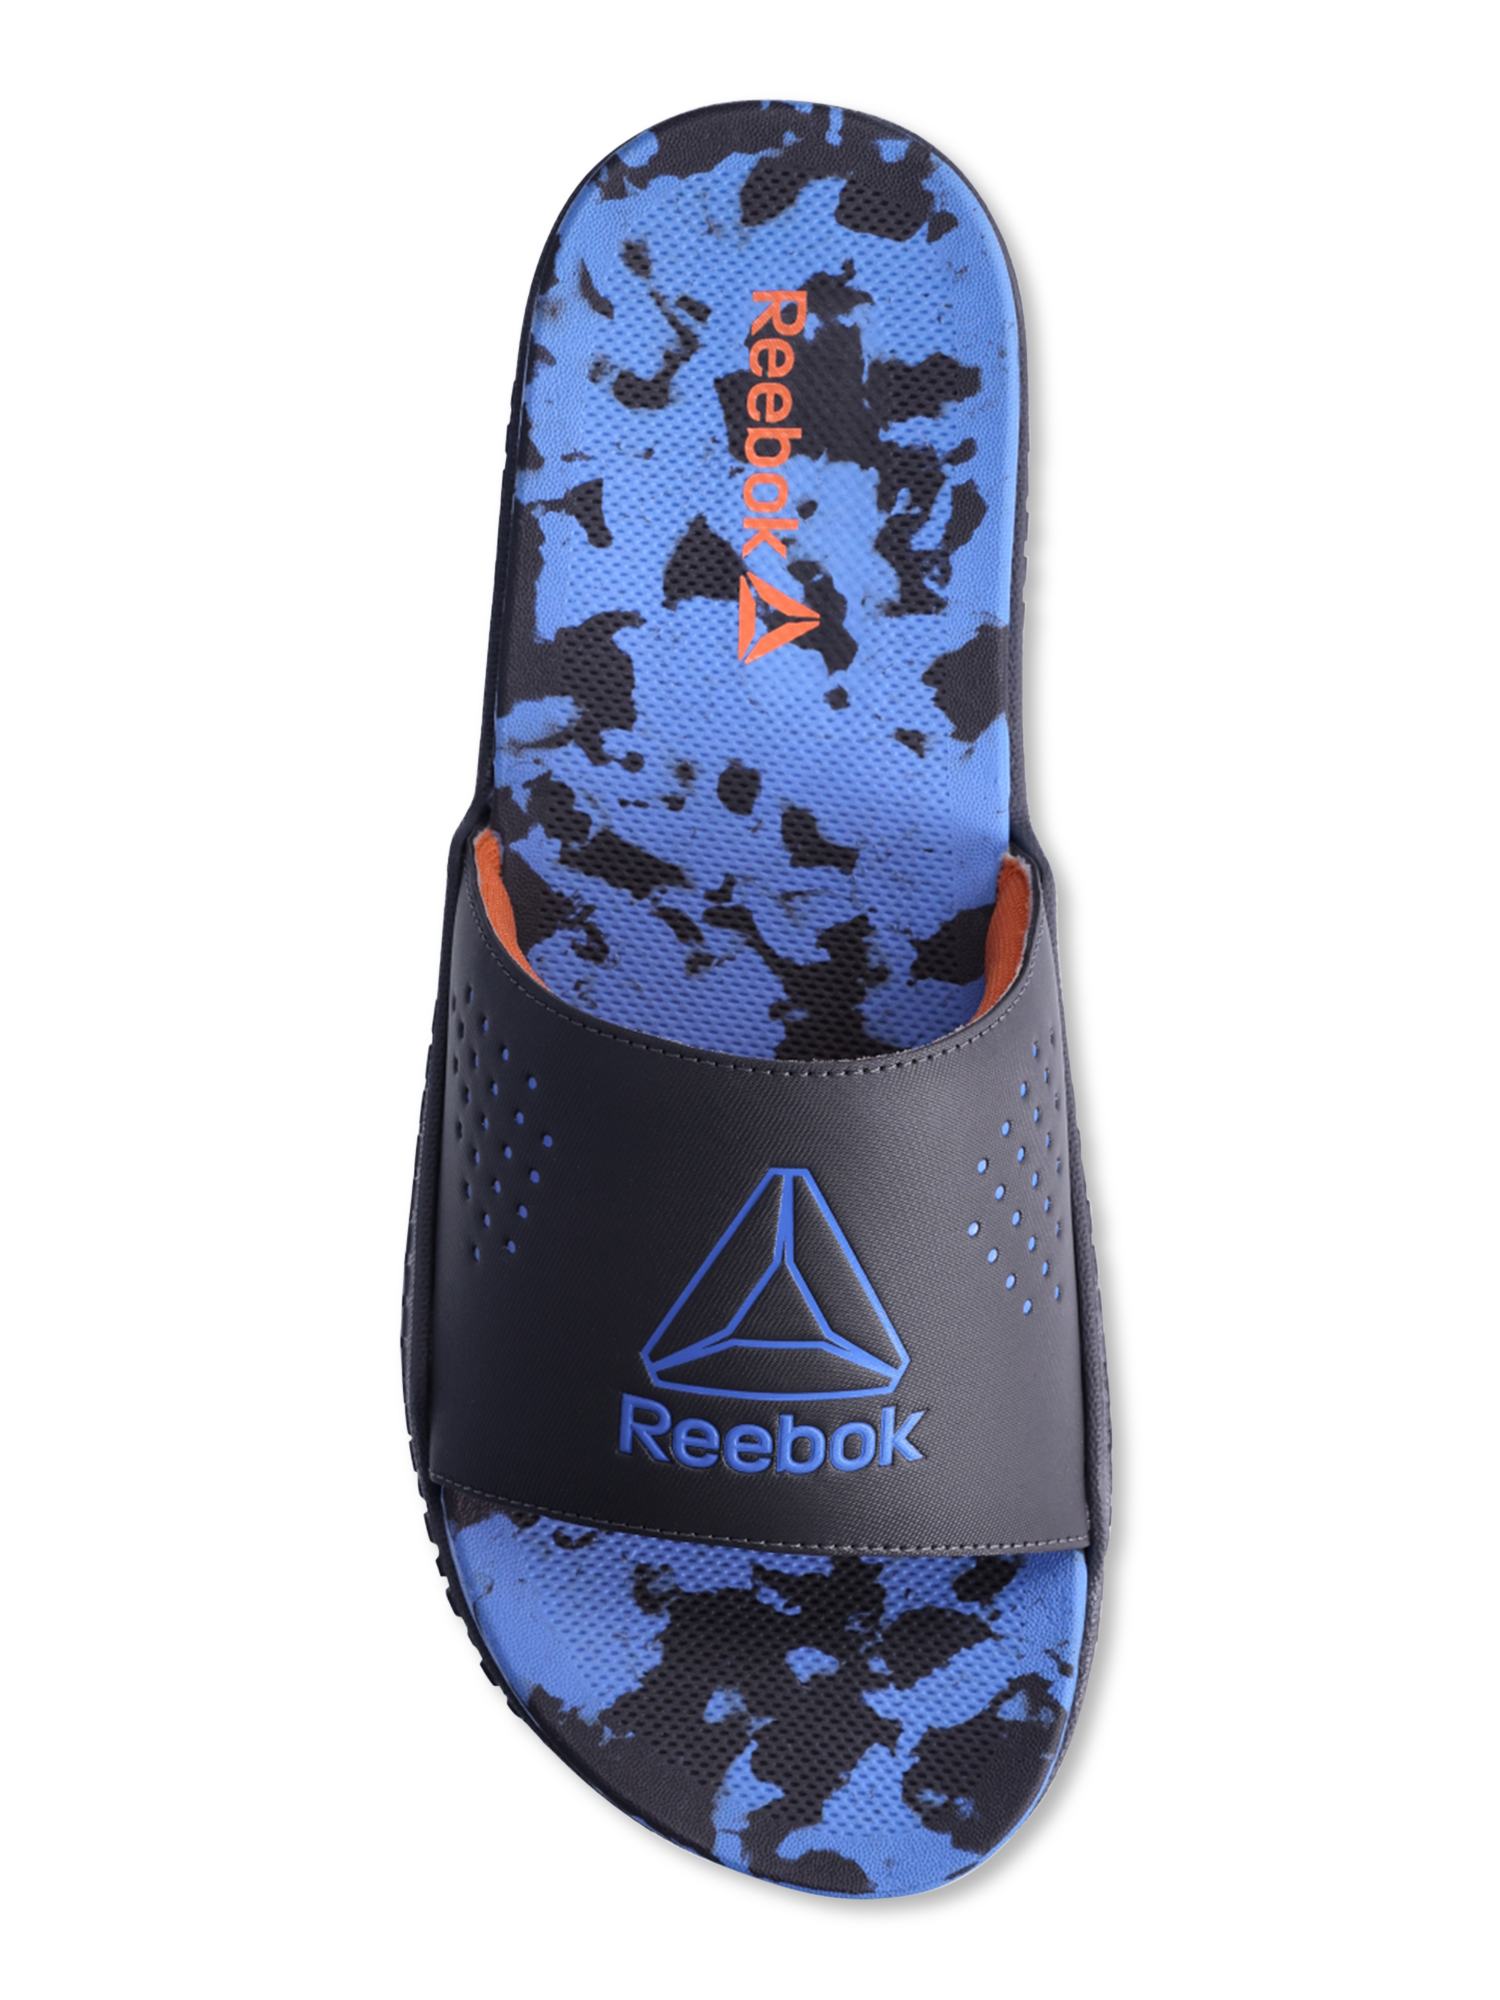 Reebok Men's Pervade Dual Density Slide Sandal - image 5 of 7